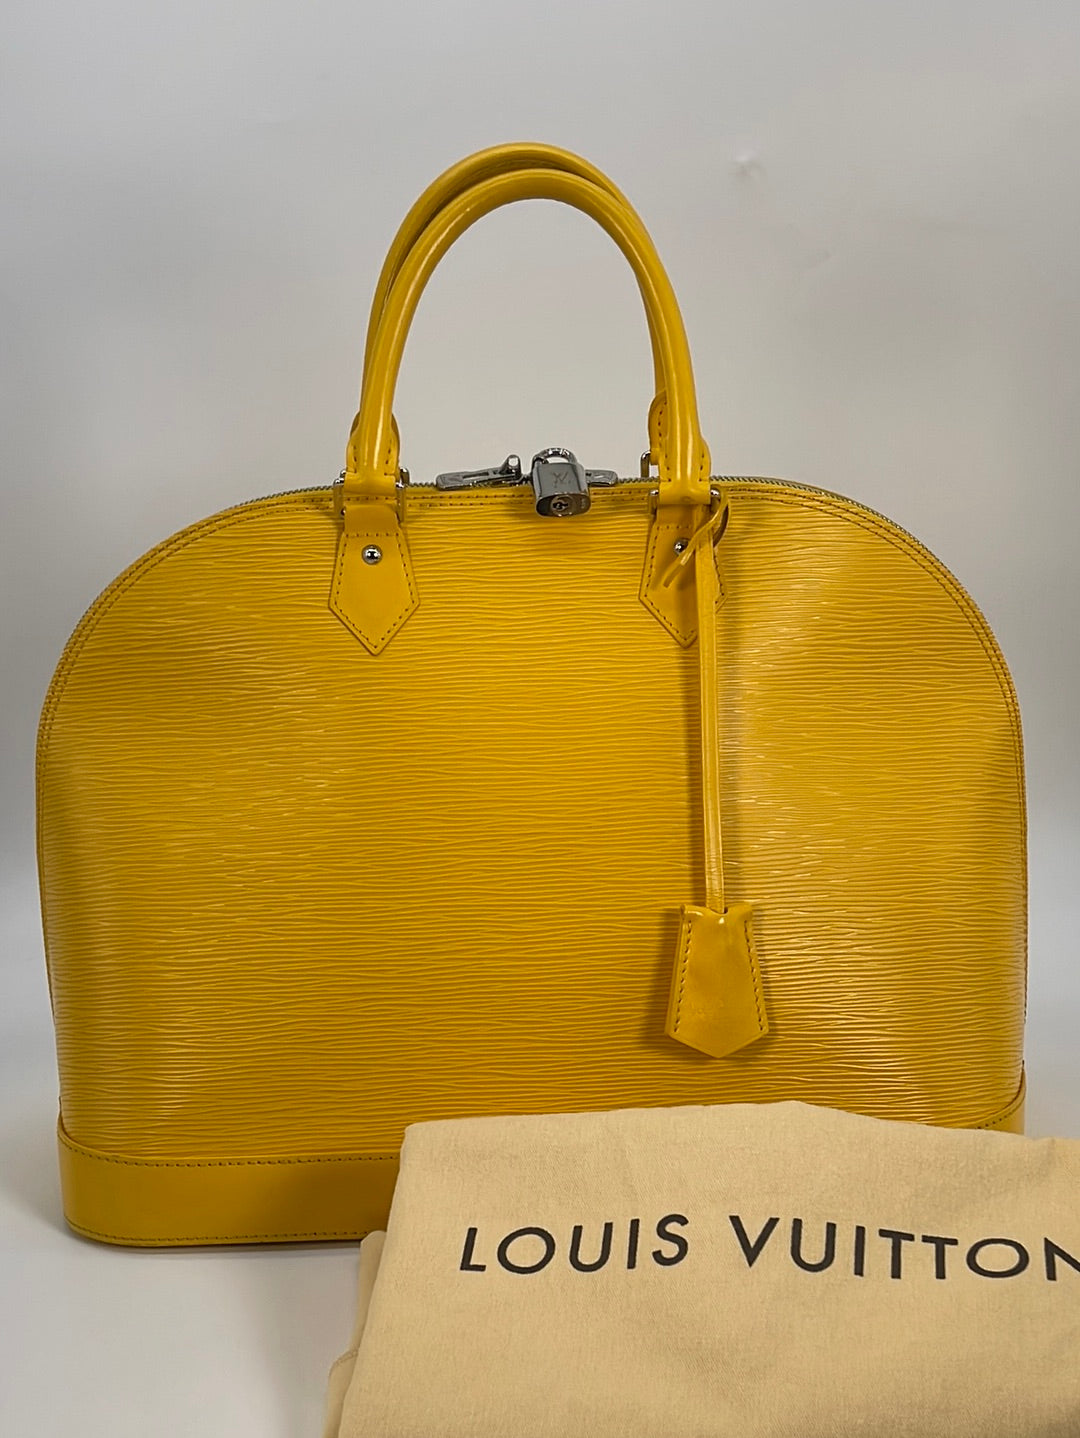 PRELOVED LOUIS VUITTON Yellow Epi Alma GM Bag MI4142 012322 – KimmieBBags  LLC